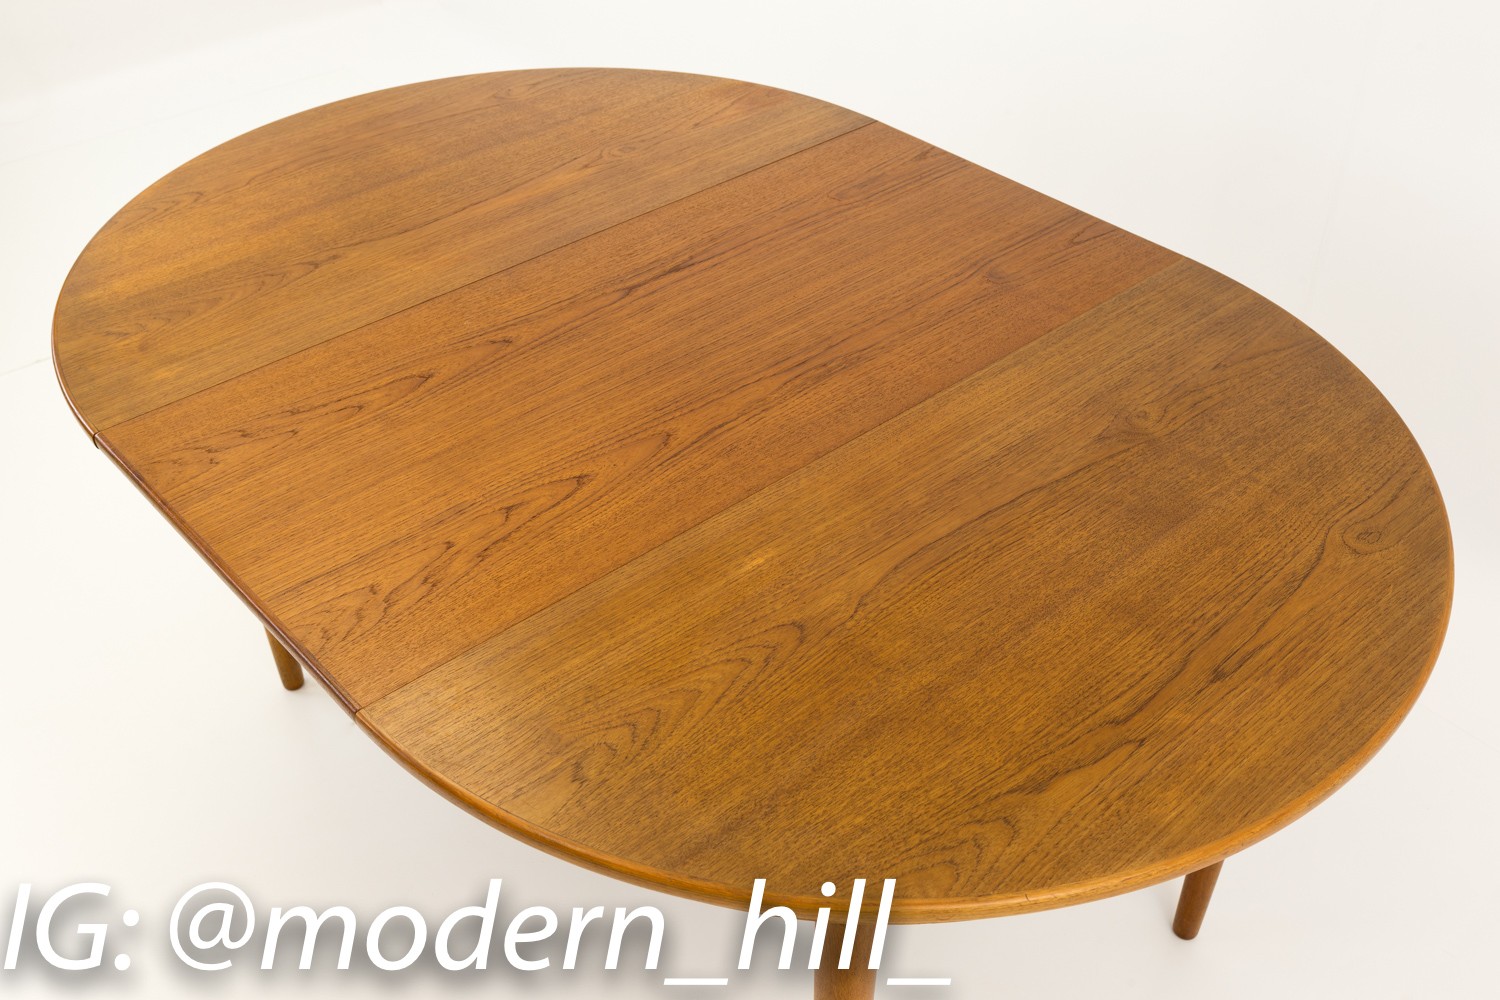 Skovmand and Andersen Danish Teak Round Mid Century Dining Table with 2 Leaves